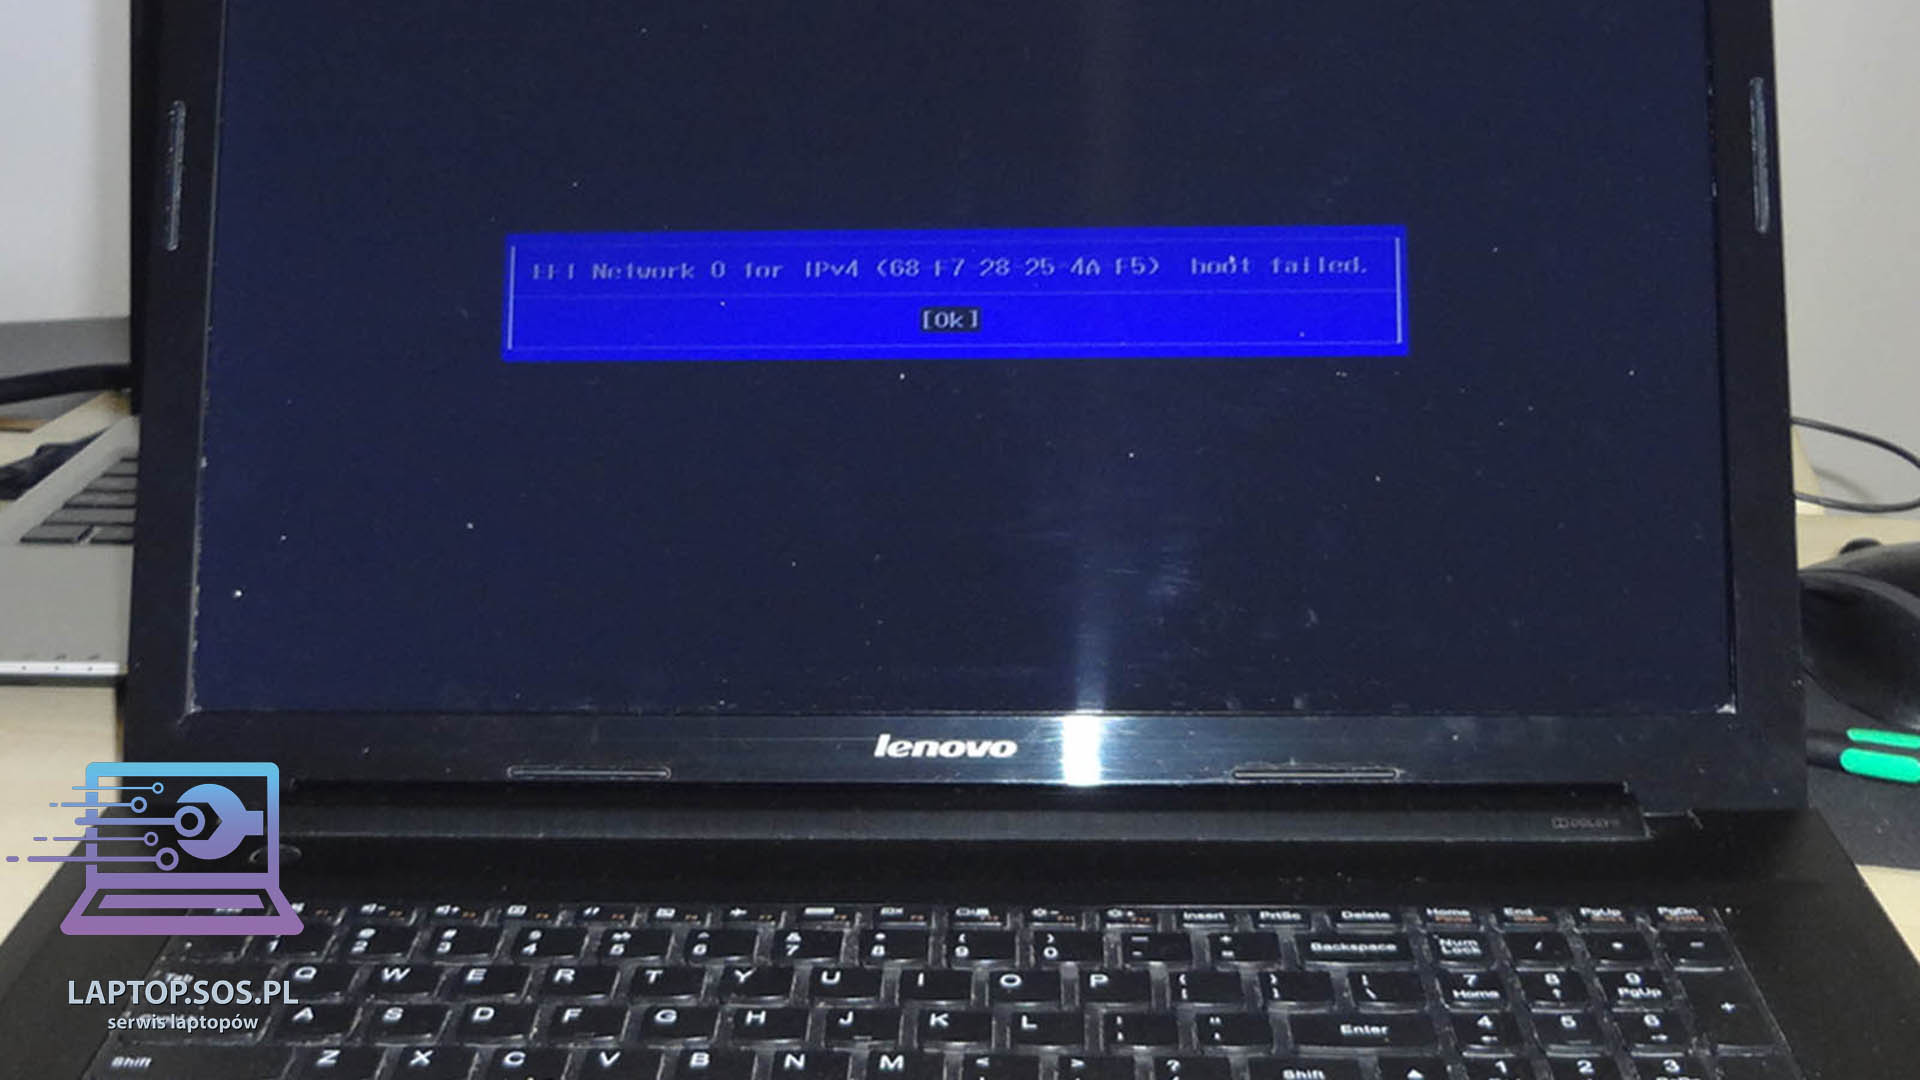 Naprawa laptopa Lenovo, błąd "EFI Network 0 for IPv4 boot failed"